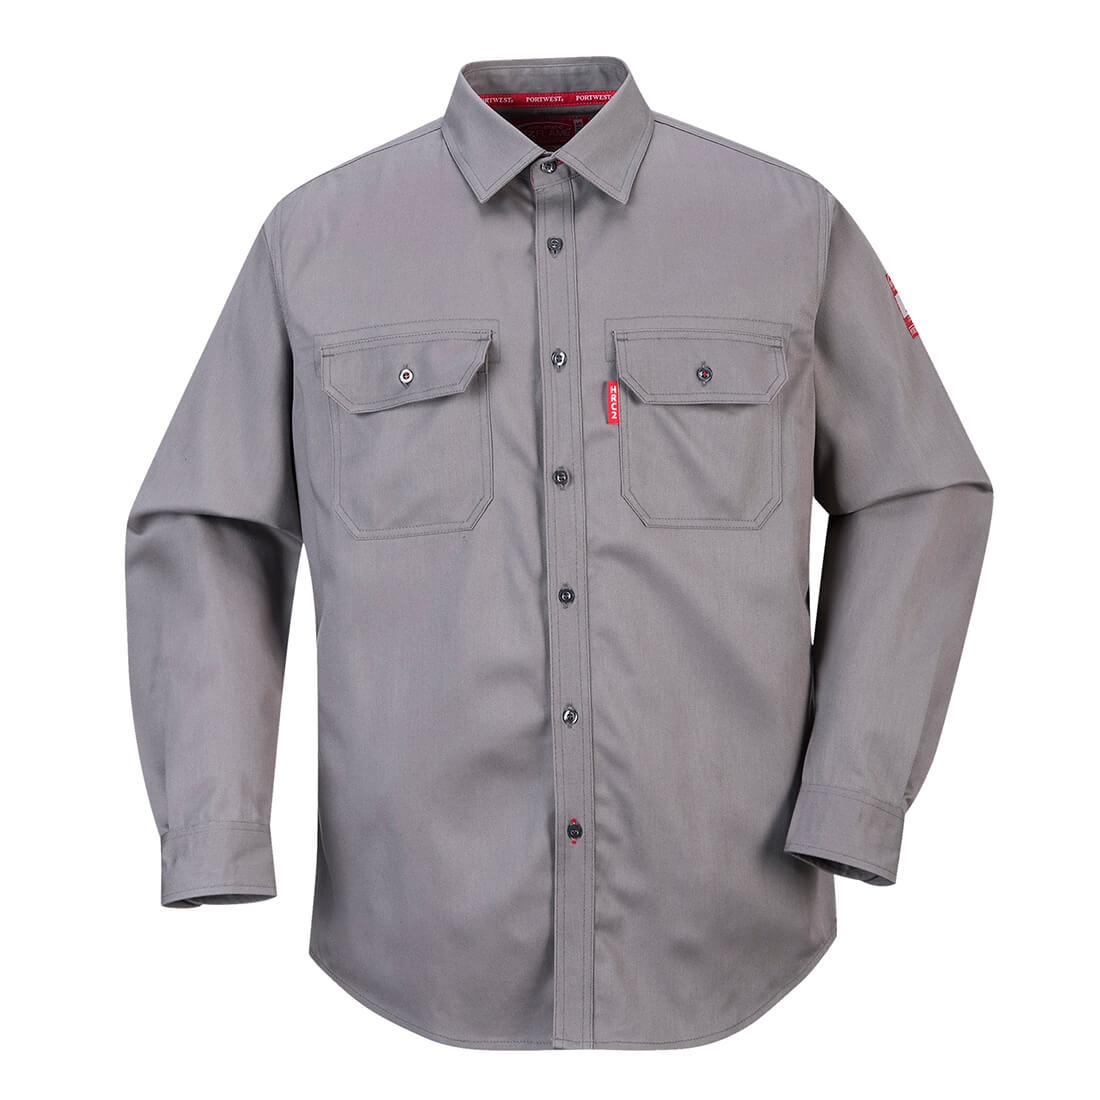 Image of Biz Flame Mens Flame Resistant Work Shirt Grey S